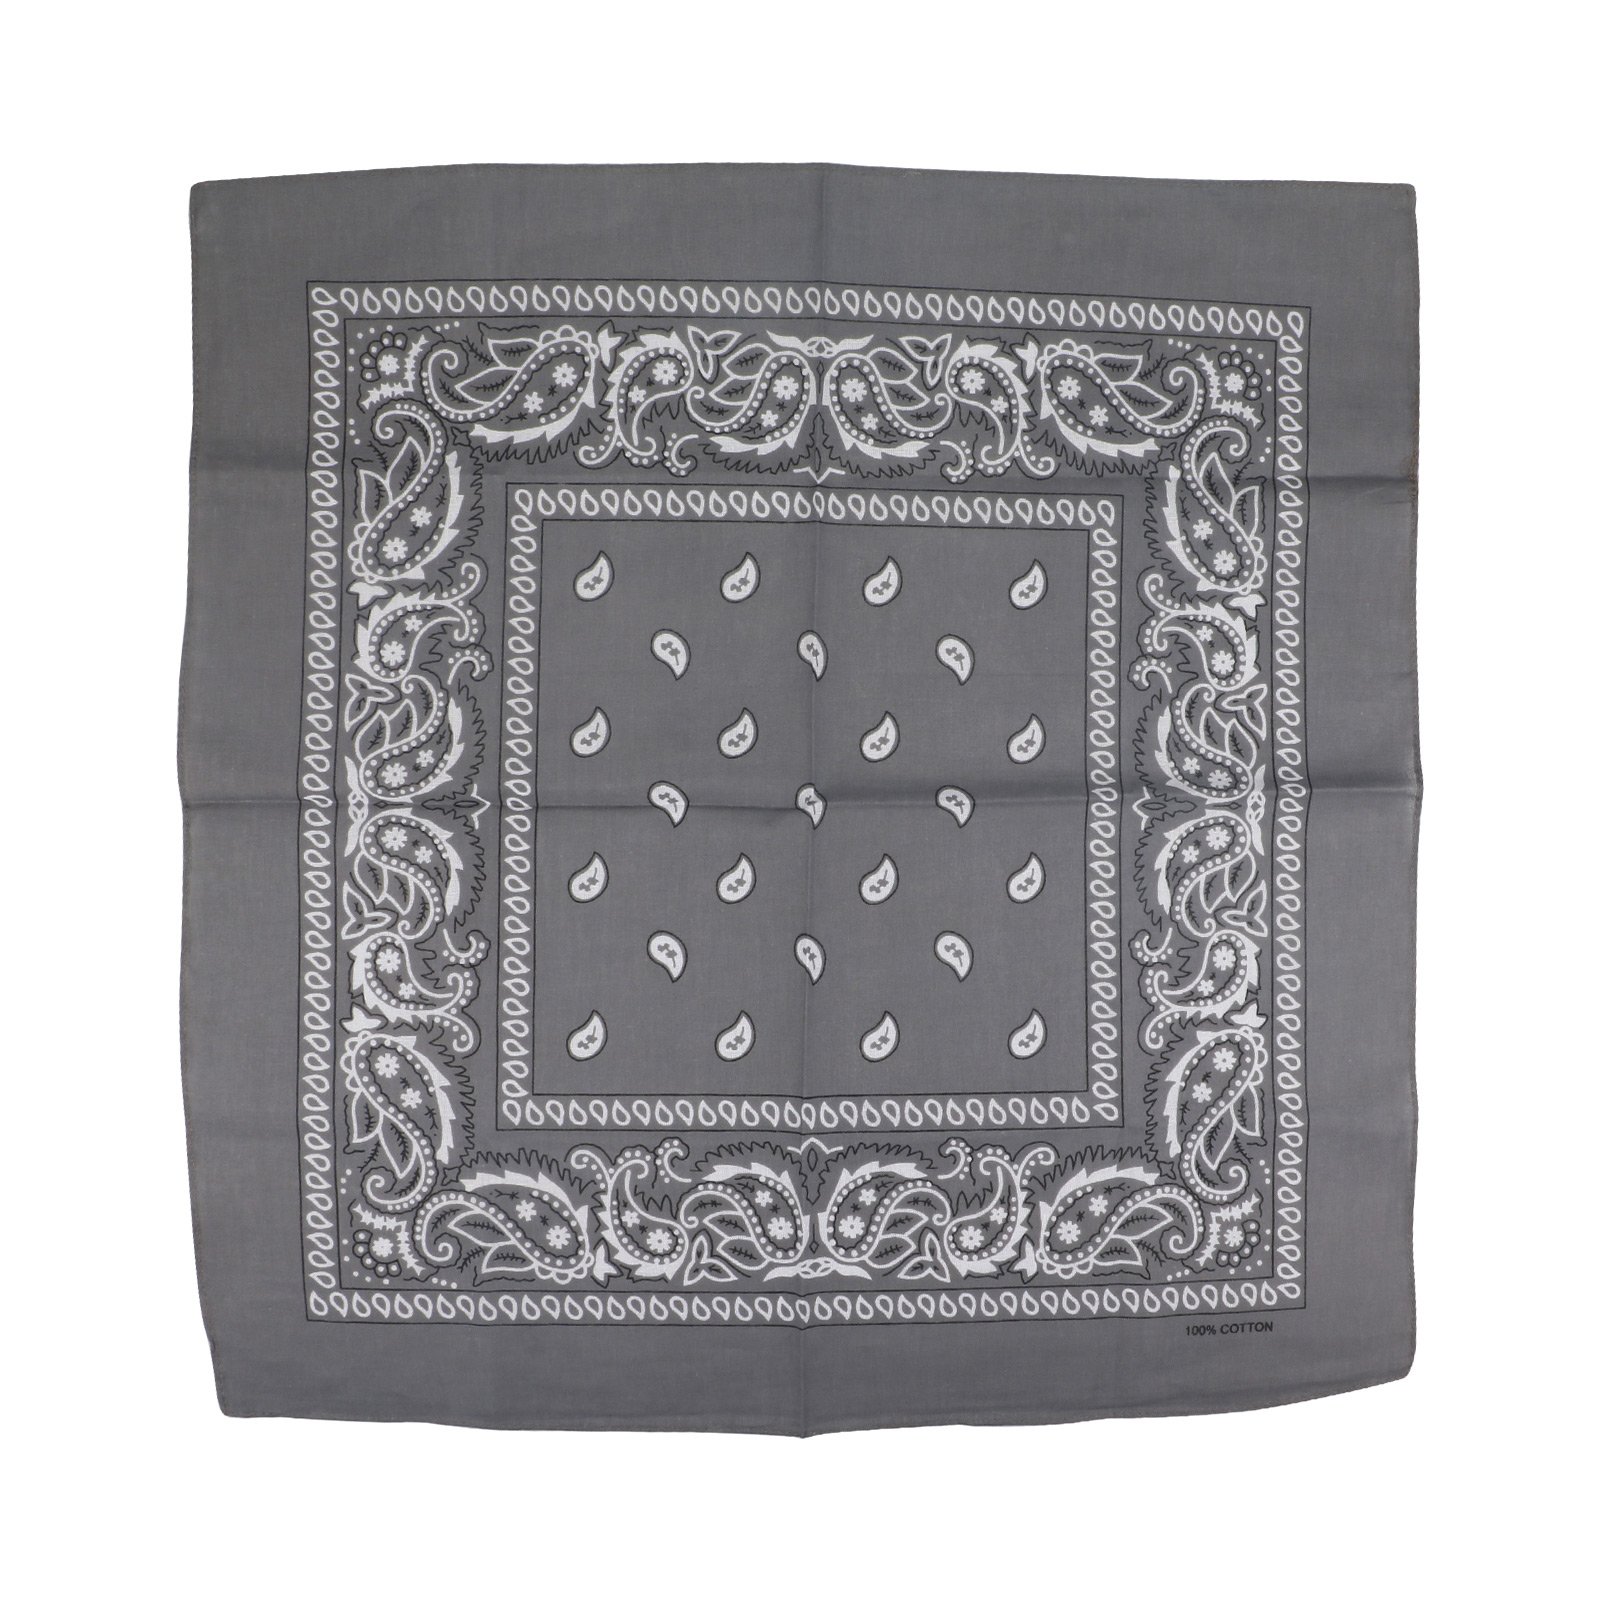 Details about   3-12PCS Bandana New 100% Cotton Paisley Print Bandanna Scarf Handkerchief